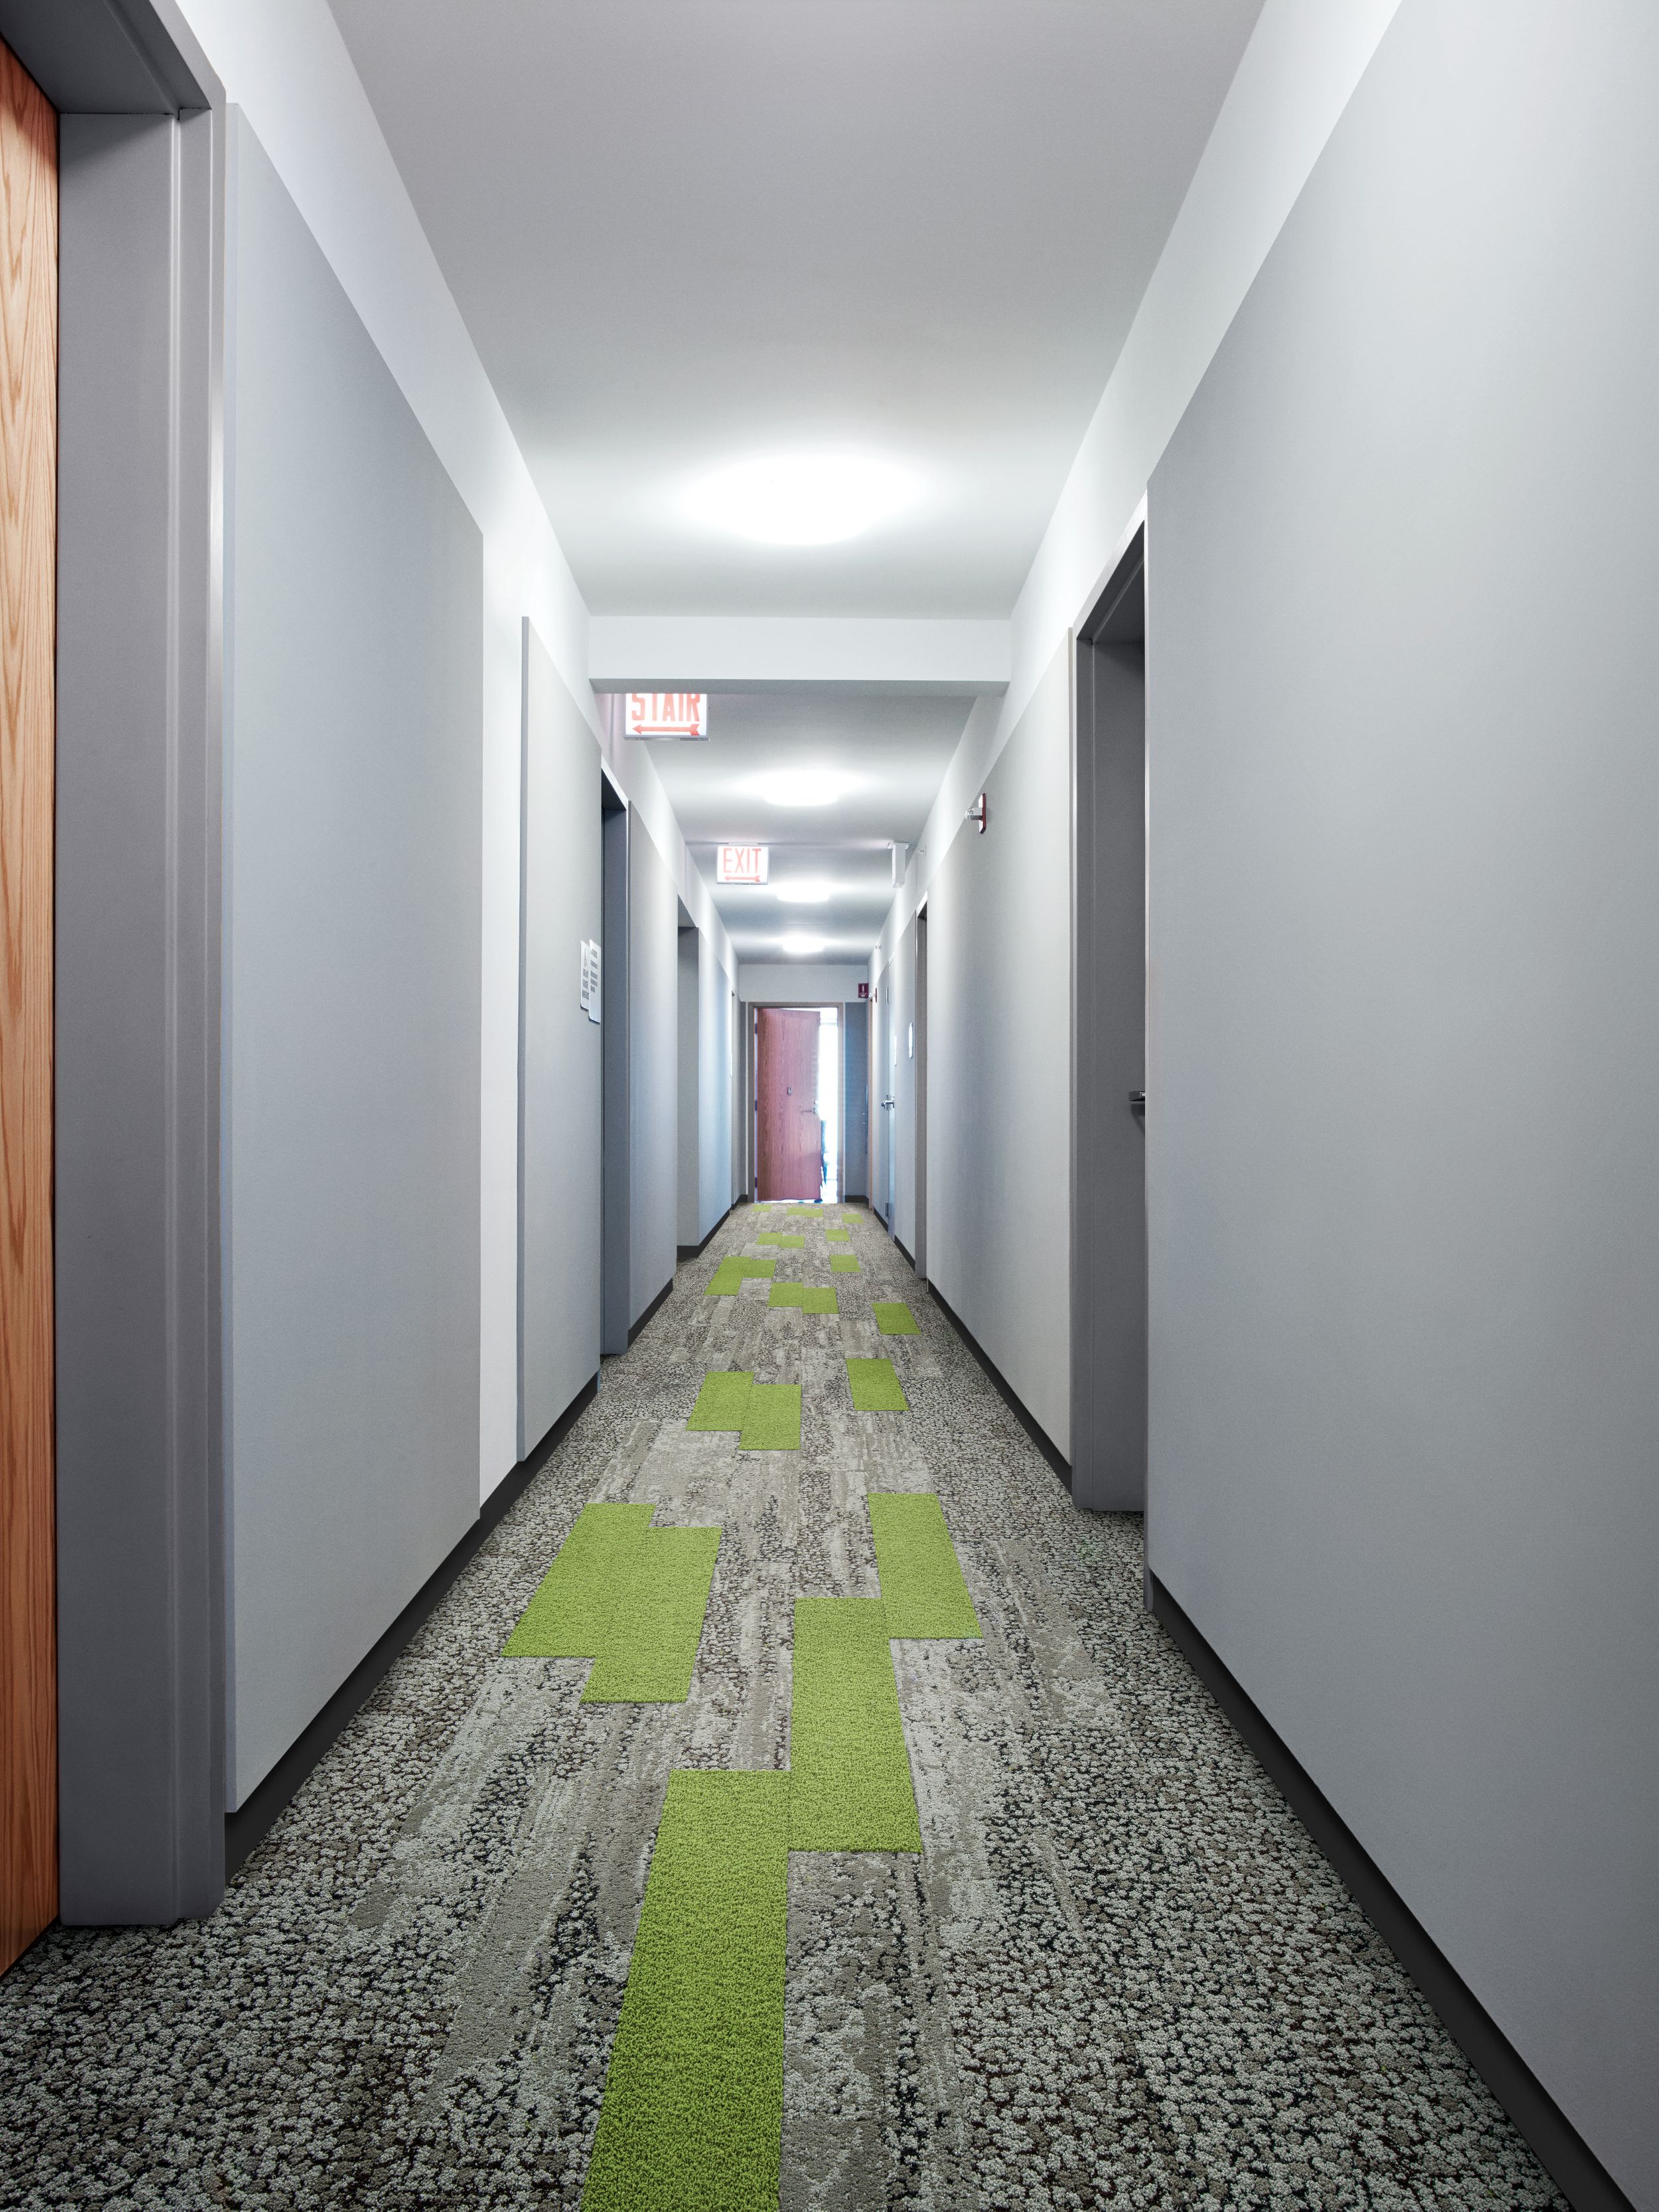 Interface HN830 and HN850 plank carpet tiles in long corridor with mutliple doors and wood door at end imagen número 6